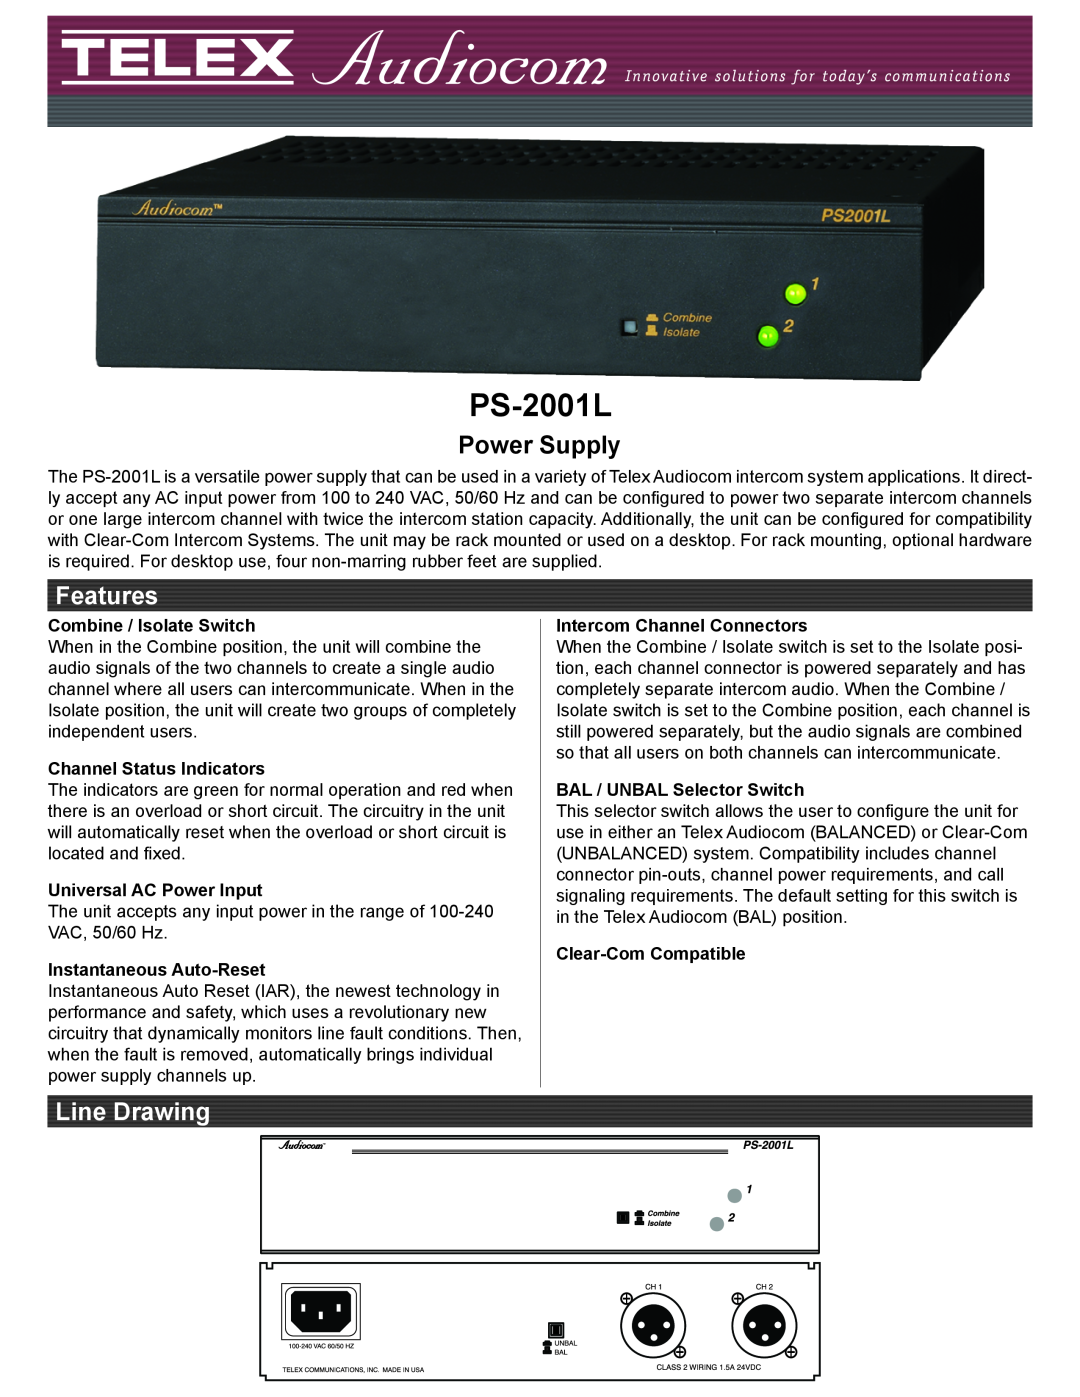 Telex manual User Instructions, Model PS-2001L Power Supply, Model SPS-2001 Power Supply, Audiocom Intercom Systems 